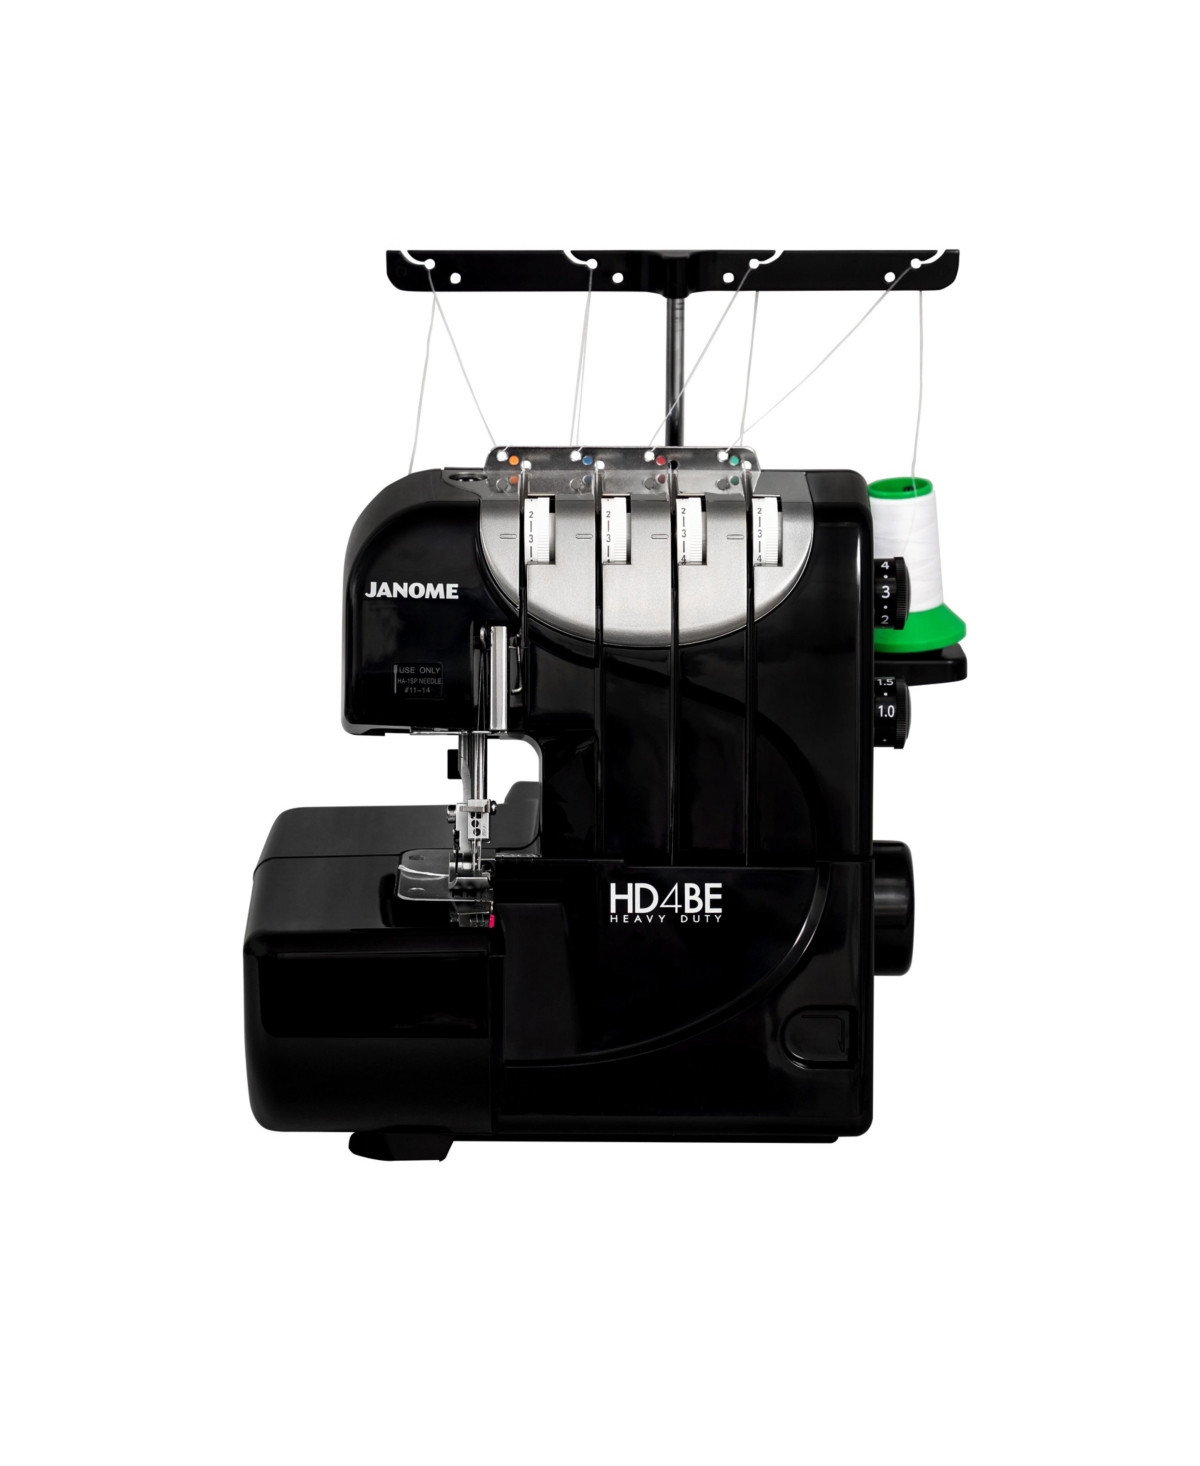 HD4BE Black Edition 2/3/4 Thread Mechanical Serger Sewing Machine - Black